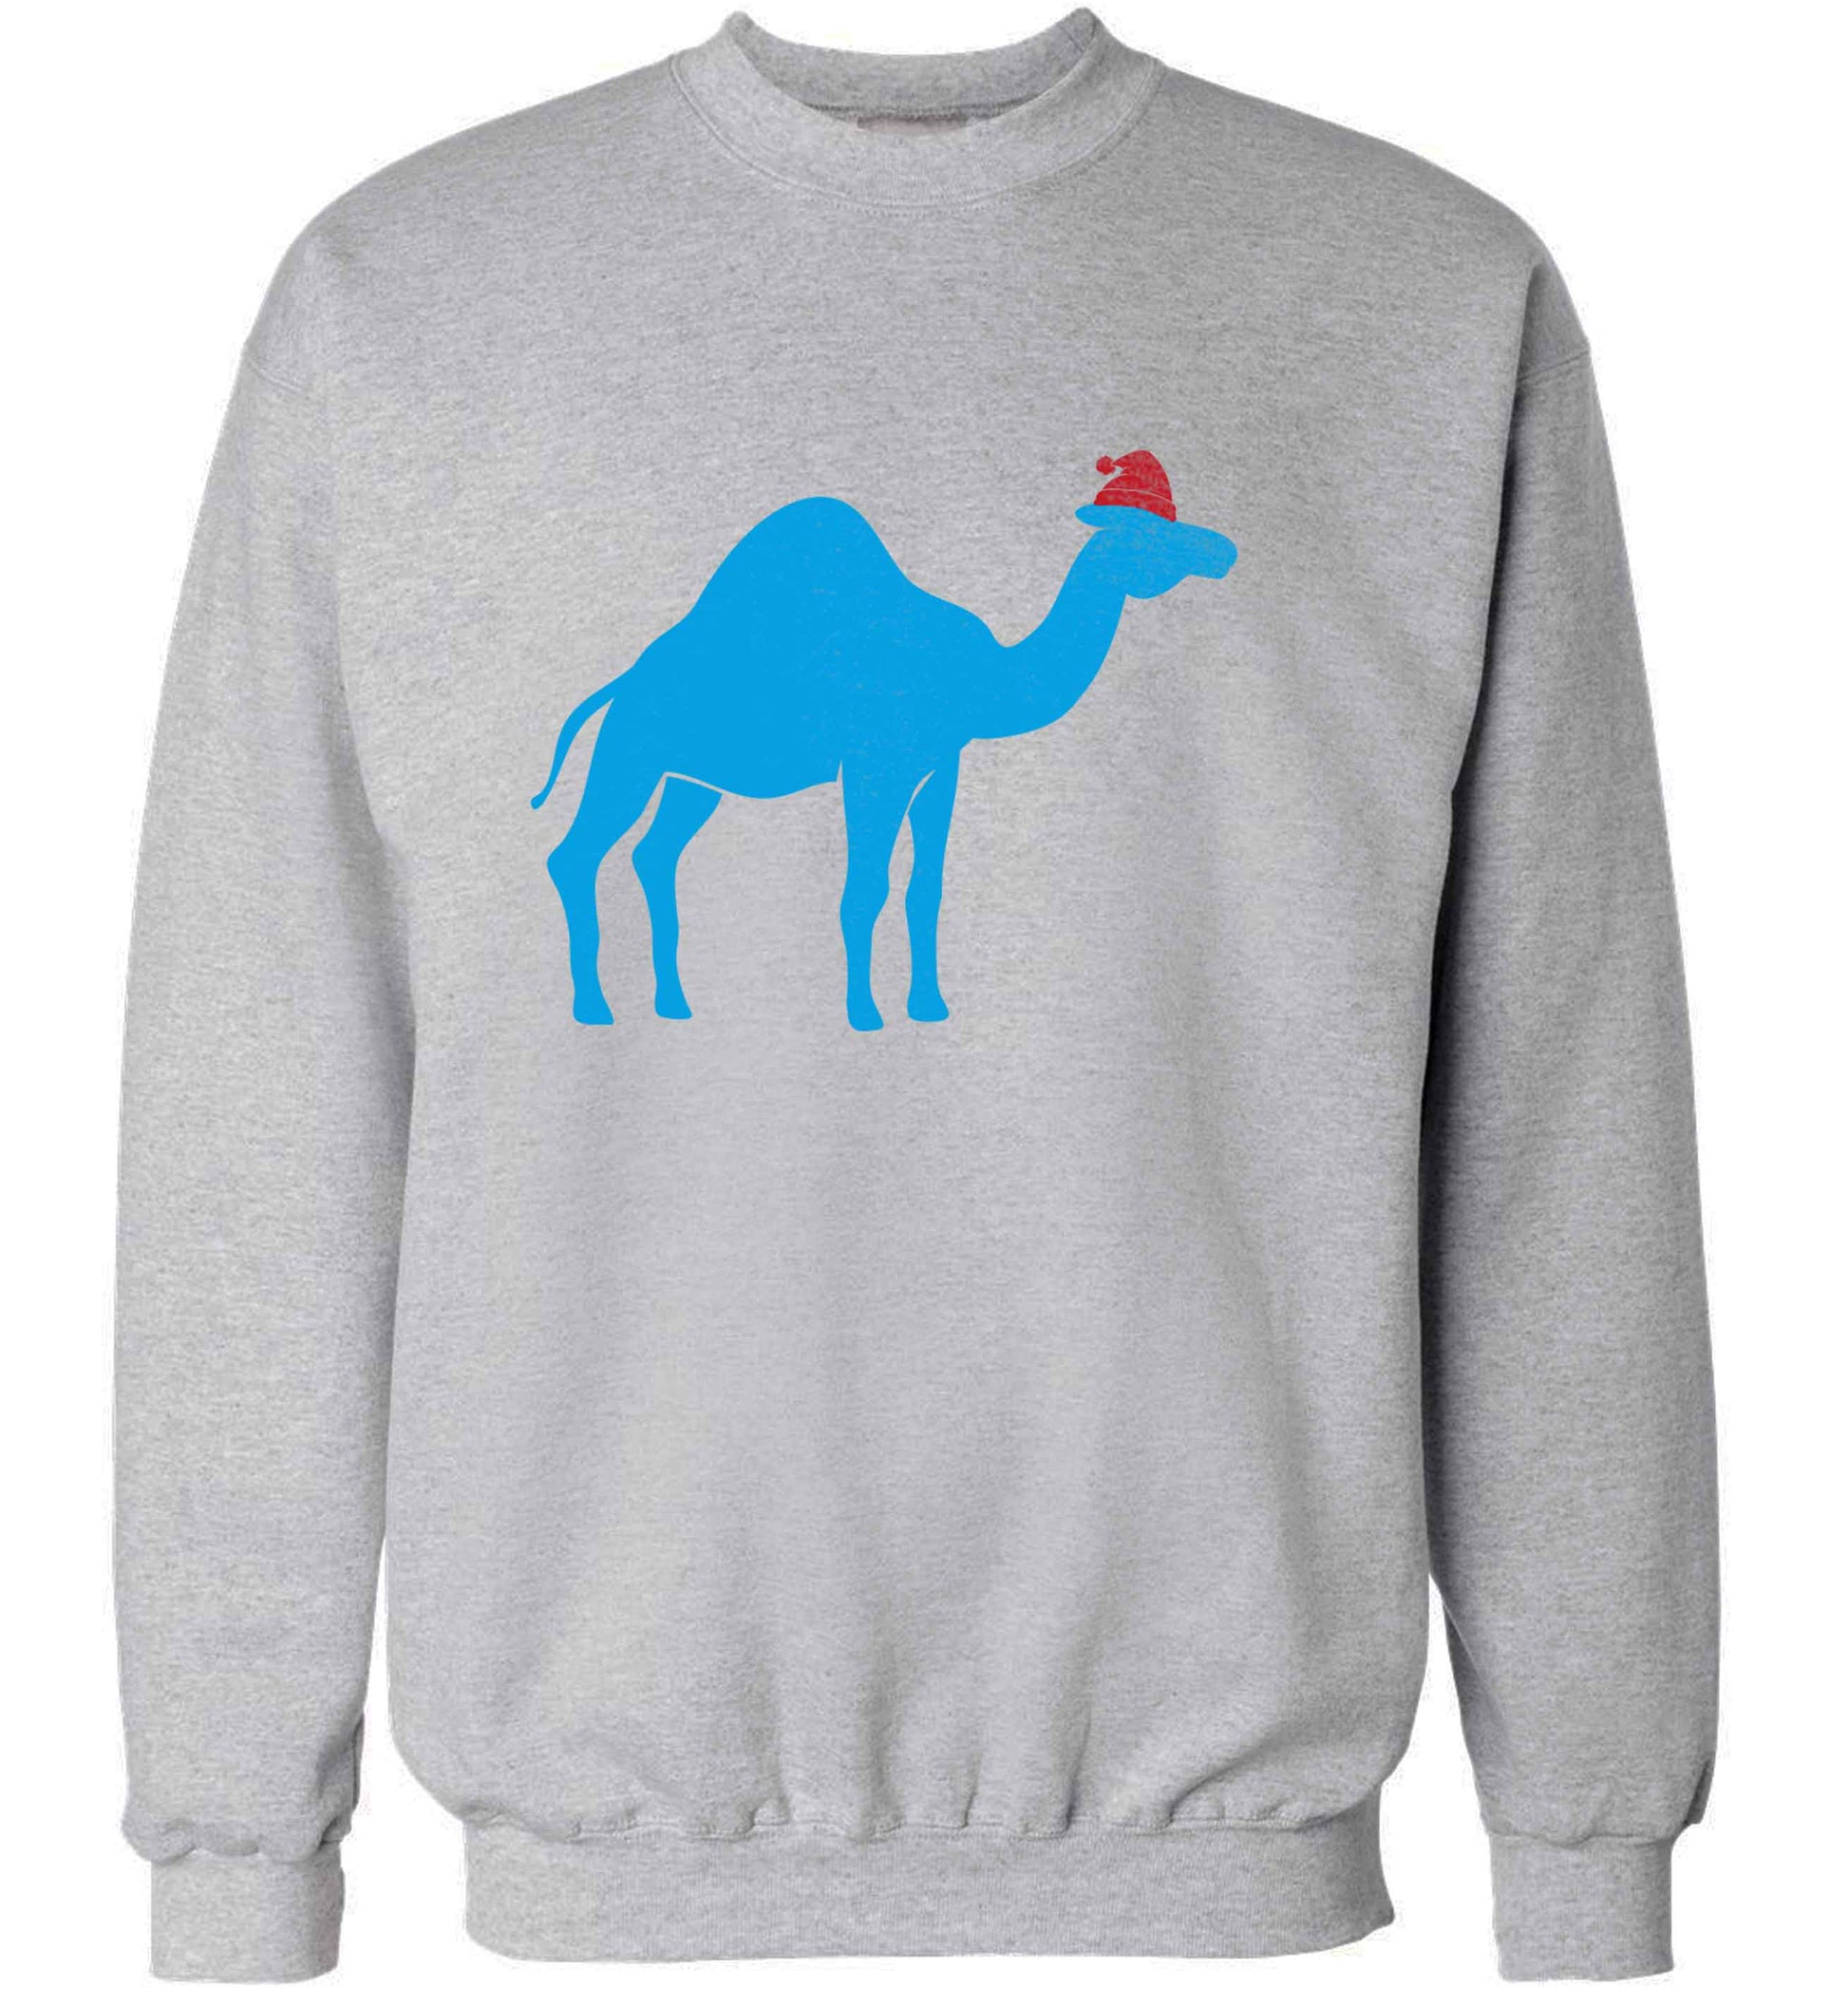 Blue camel santa adult's unisex grey sweater 2XL